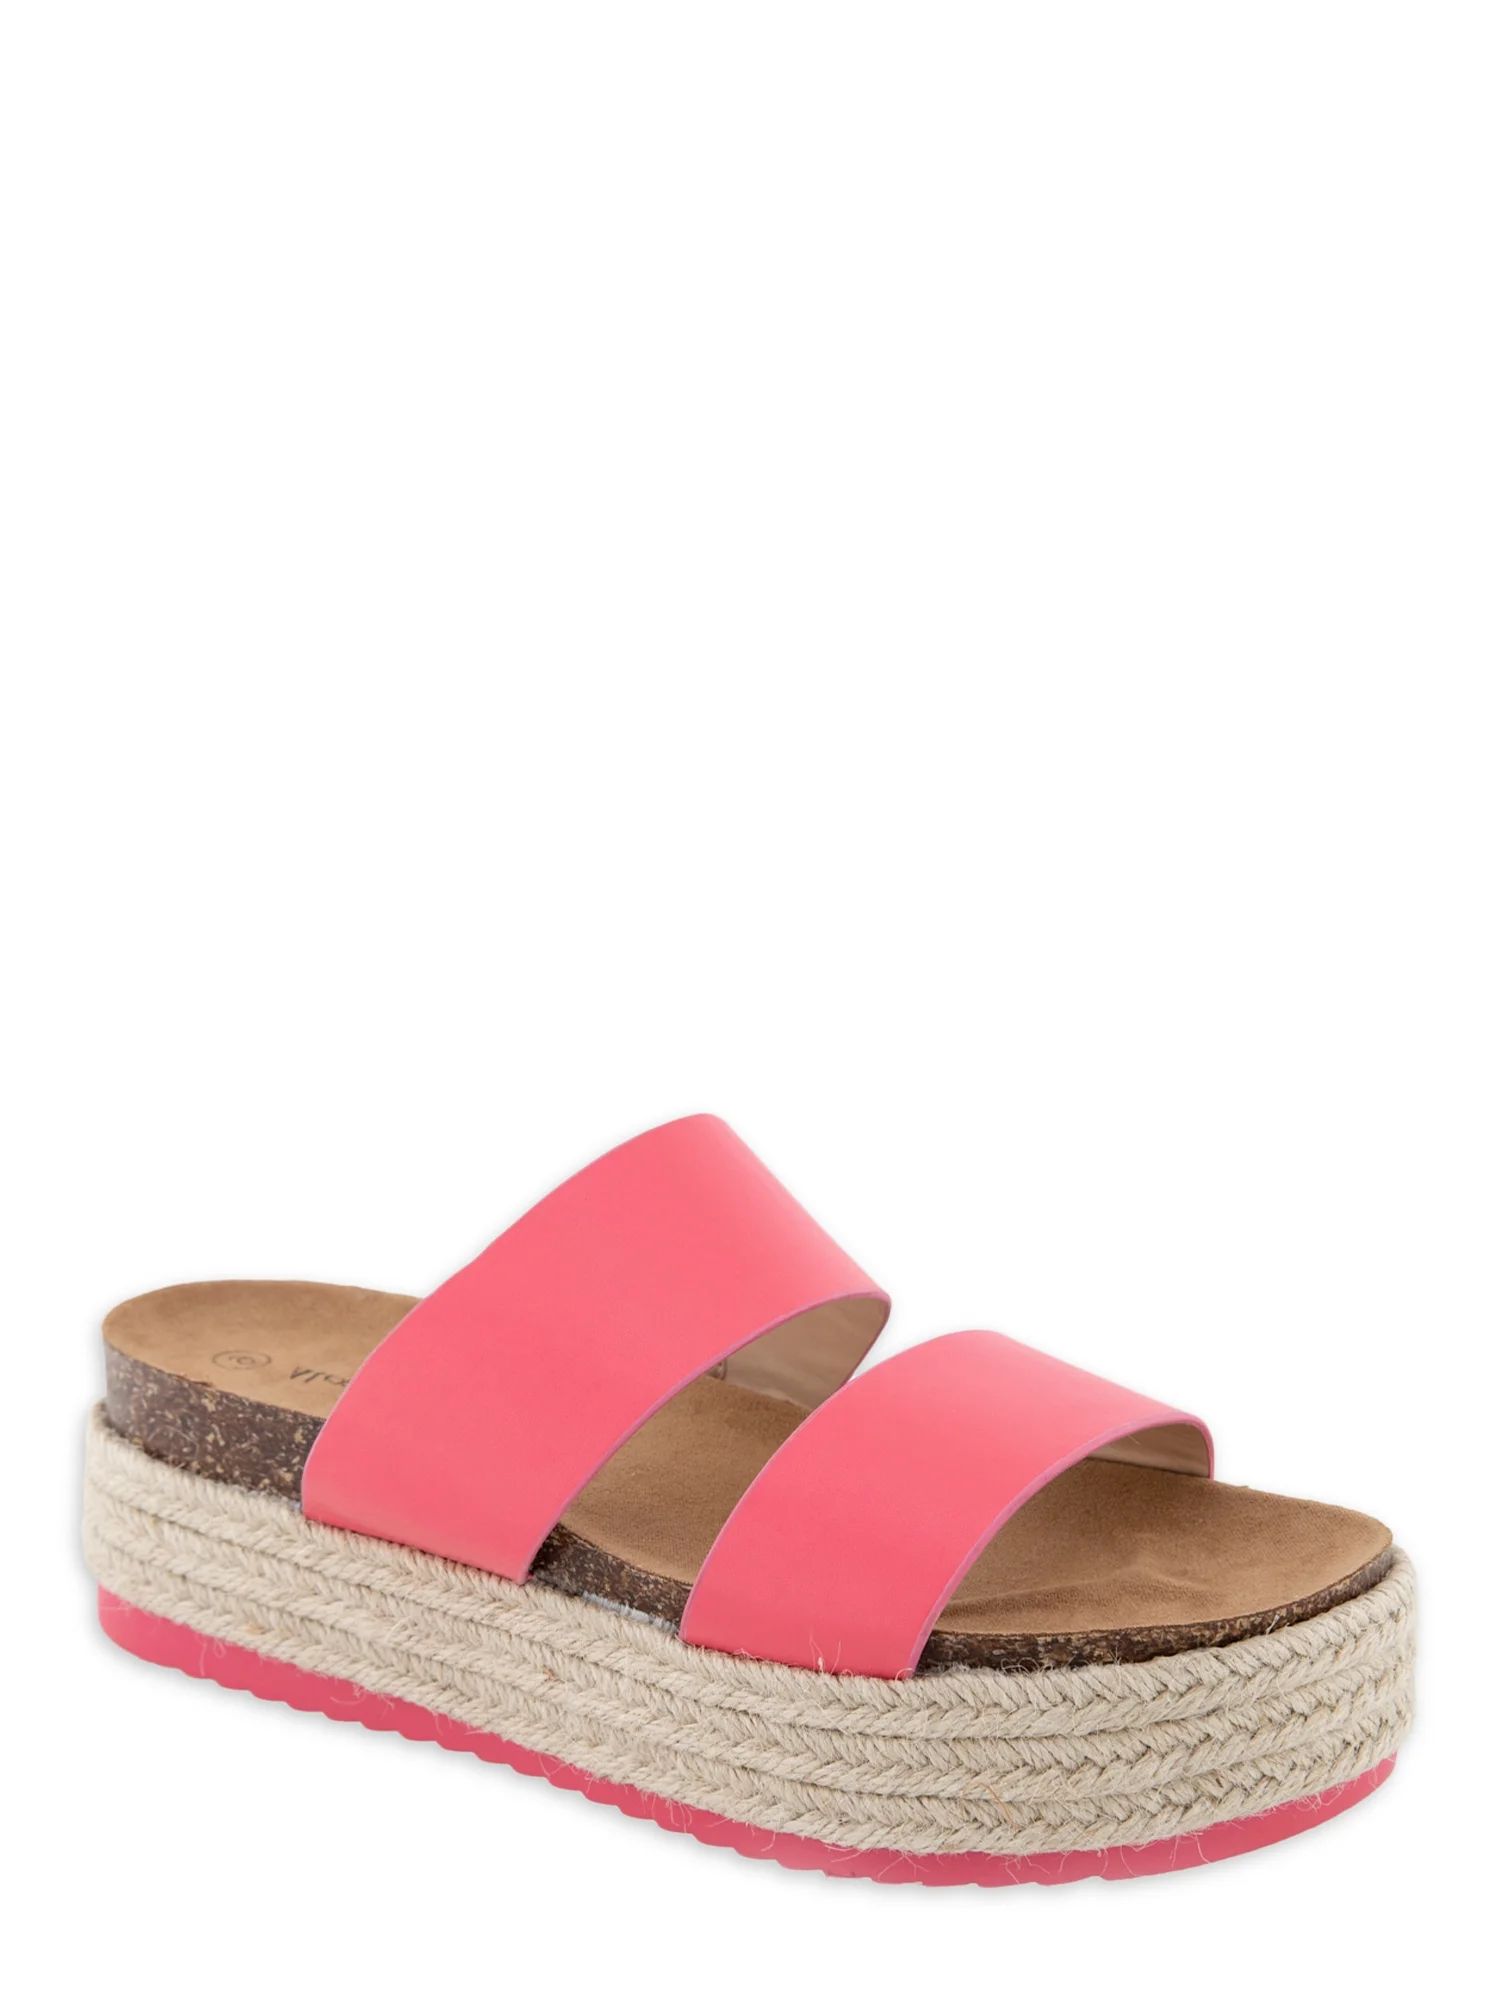 Alexis Bendel Women's Espadrille Platform Footbed Sandals, Sizes 6-10 | Walmart (US)